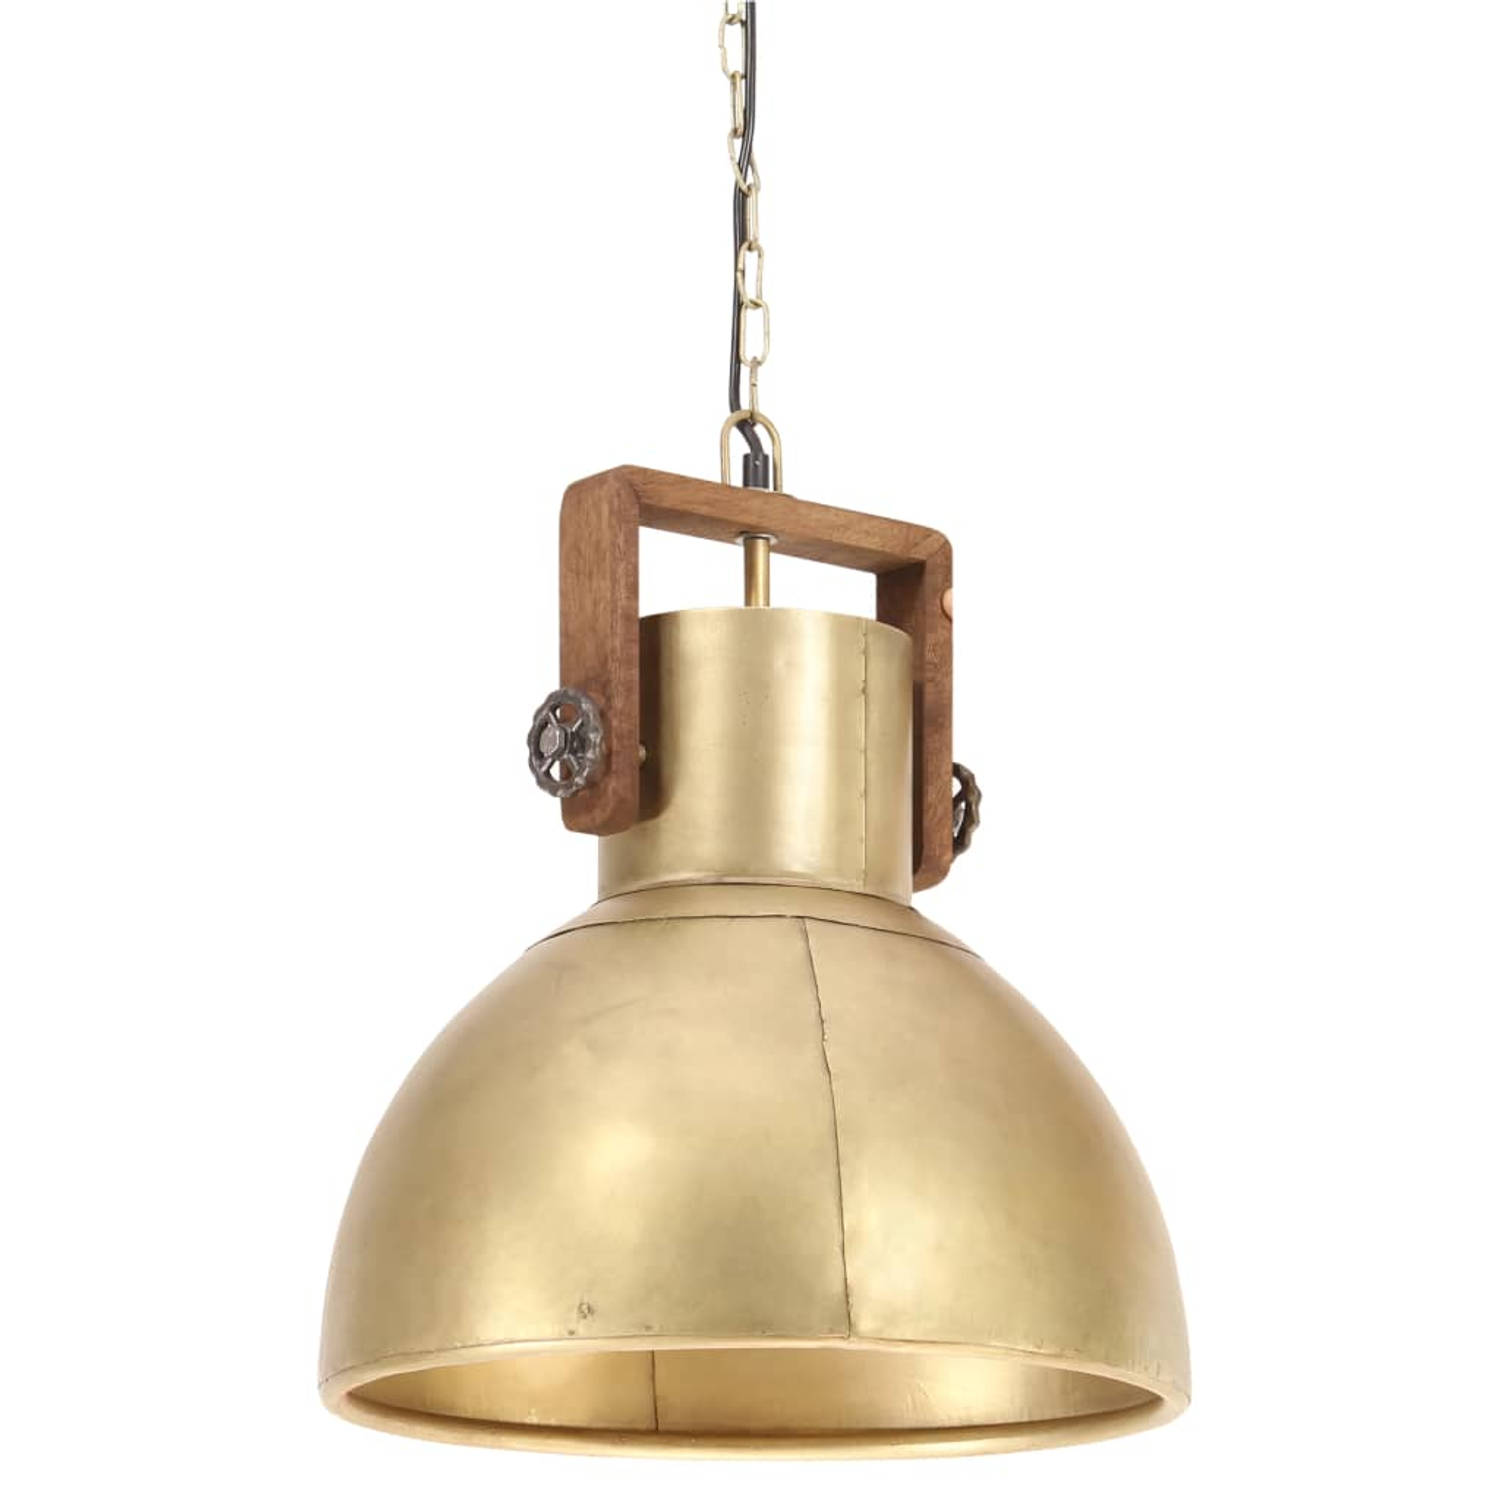 The Living Store Hanglamp Industriële Stijl - 40x47 cm - Messing - bruin